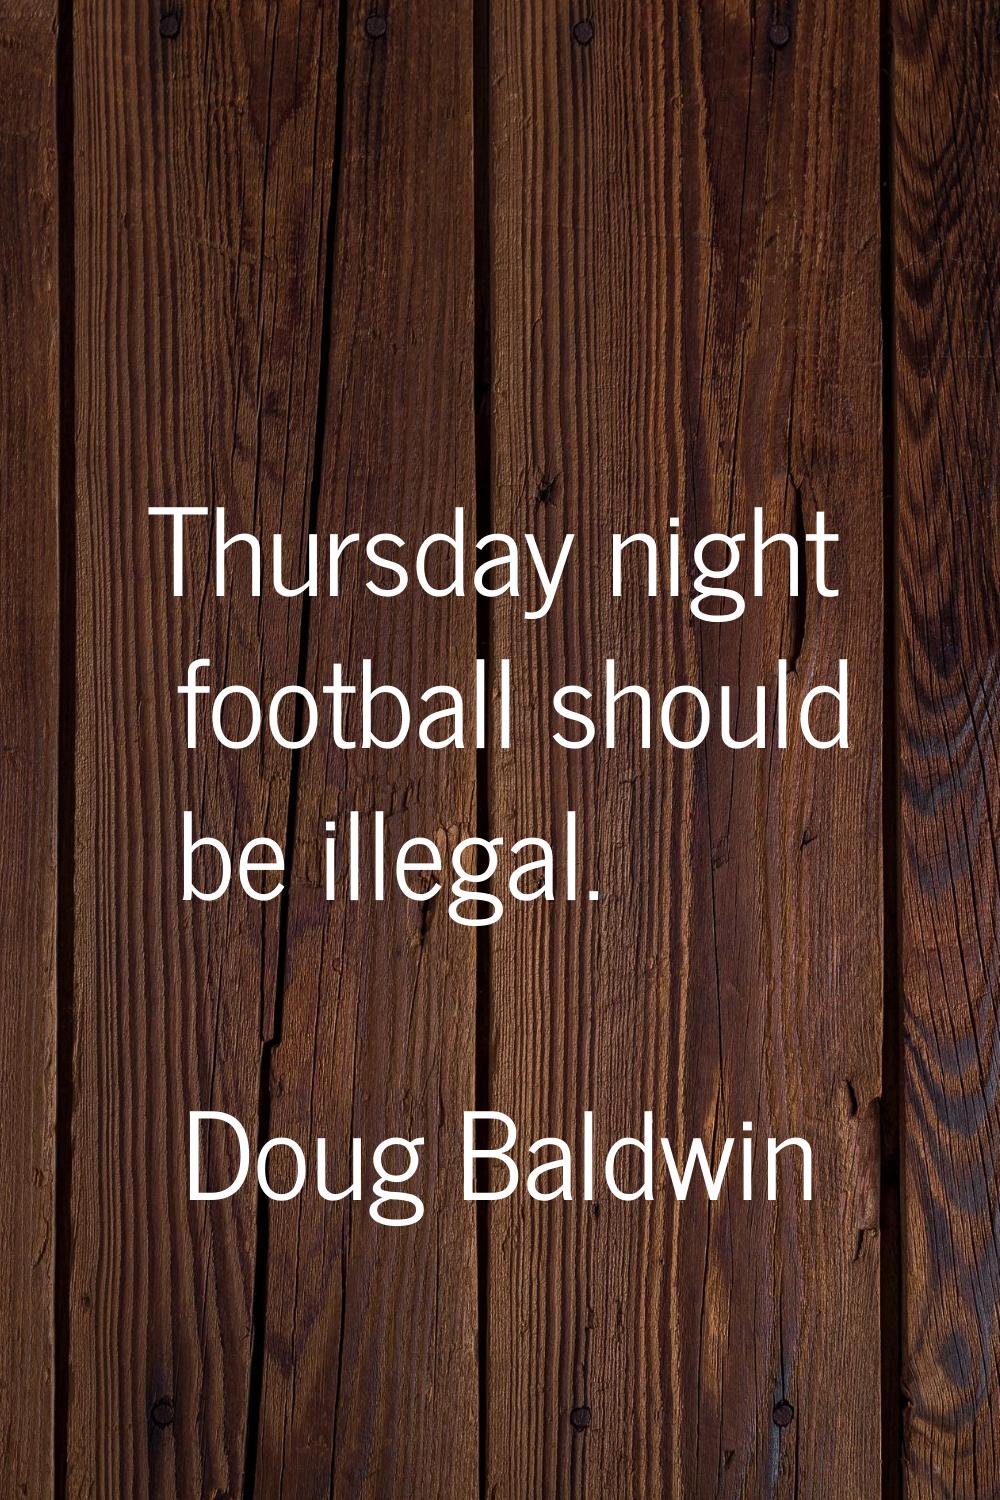 Thursday night football should be illegal.